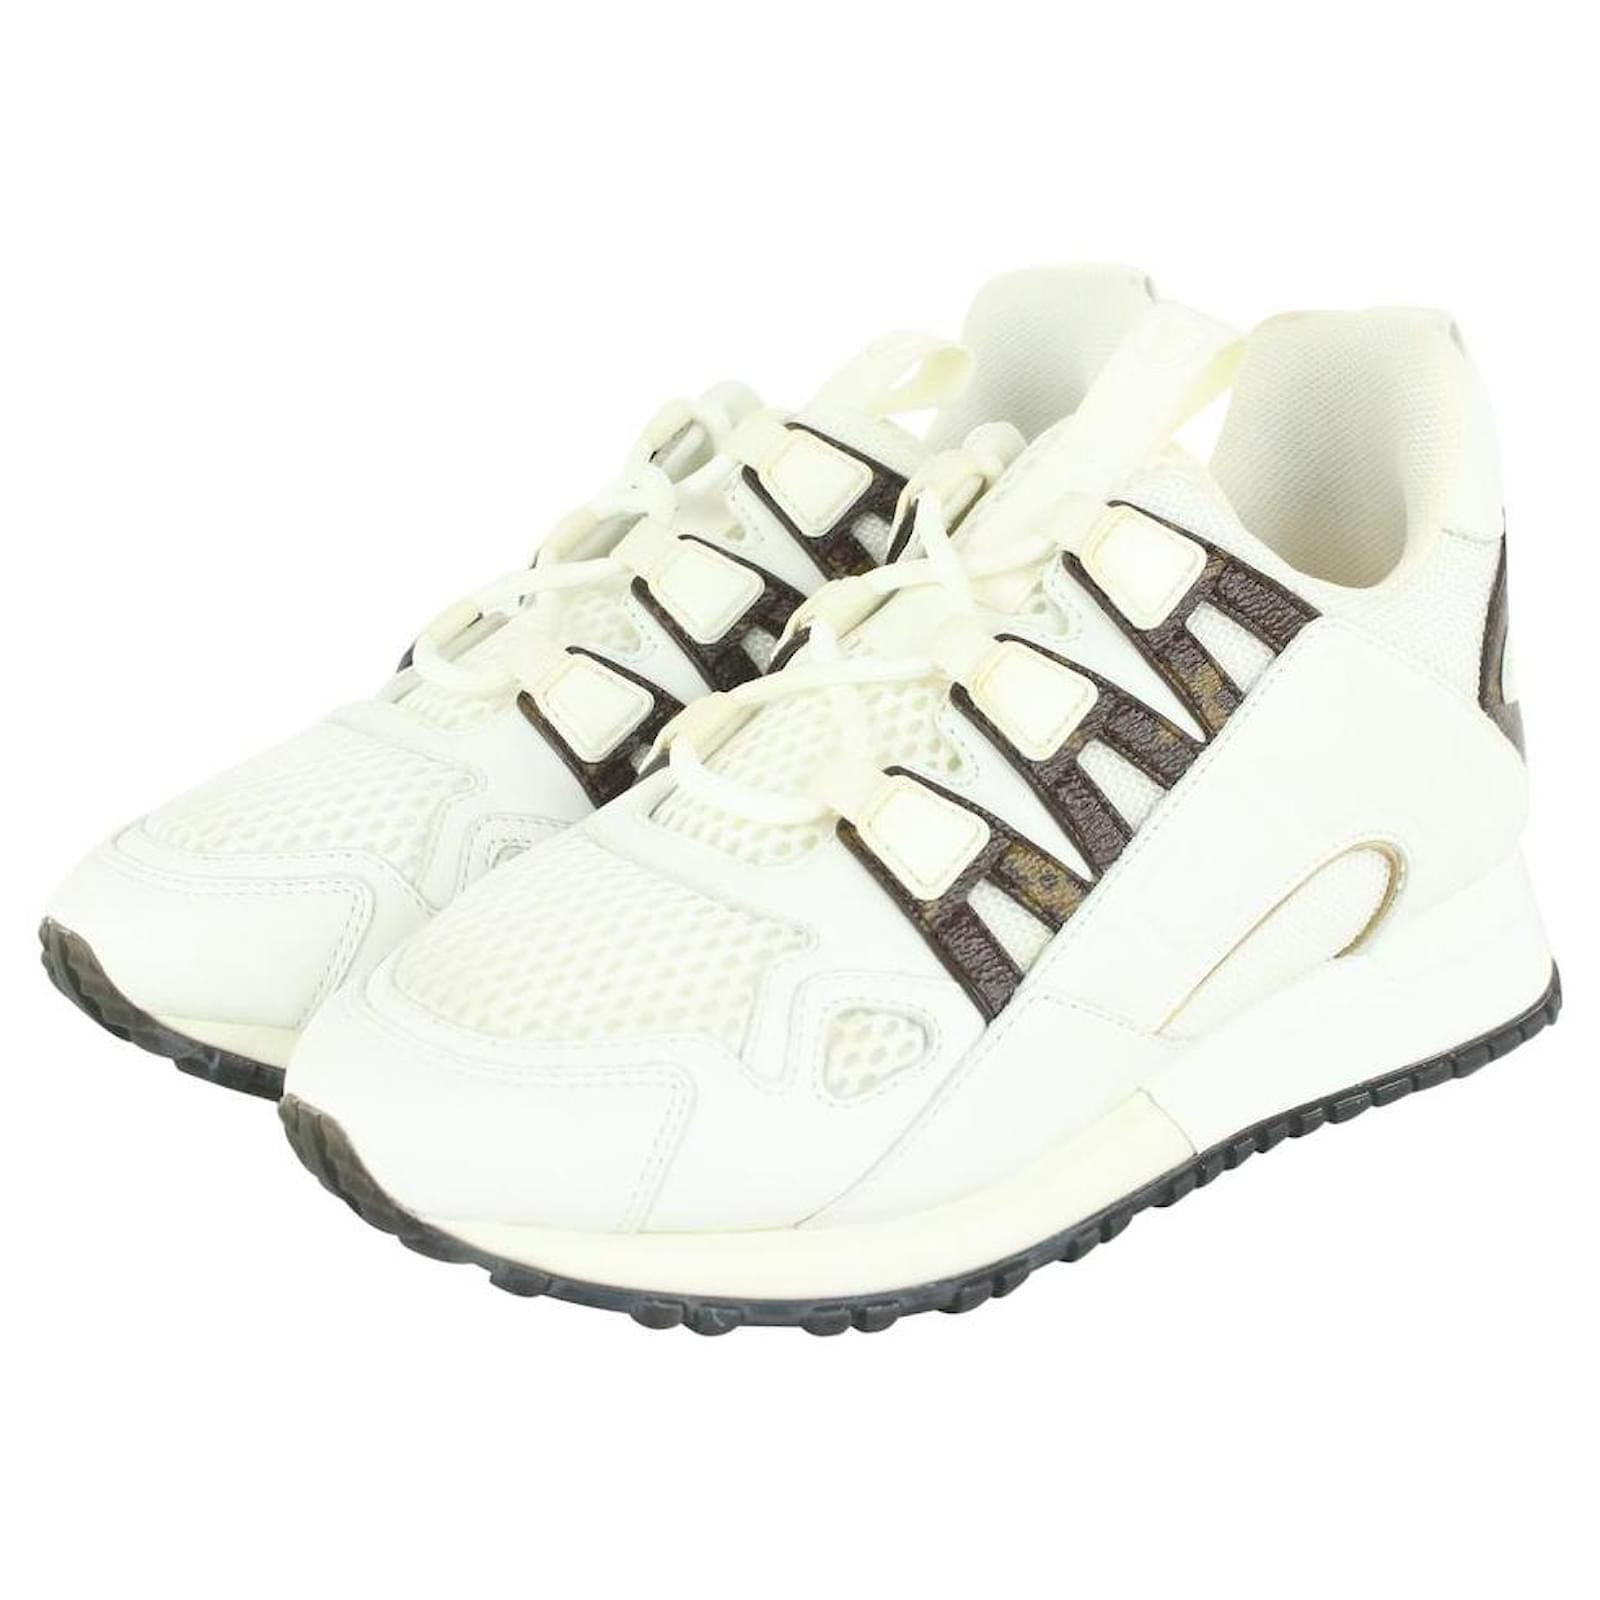 Sneakers Louis Vuitton Louis Vuitton Trainer Sneakers Leather High Cut White 1a5a0D LV Auth ak173a